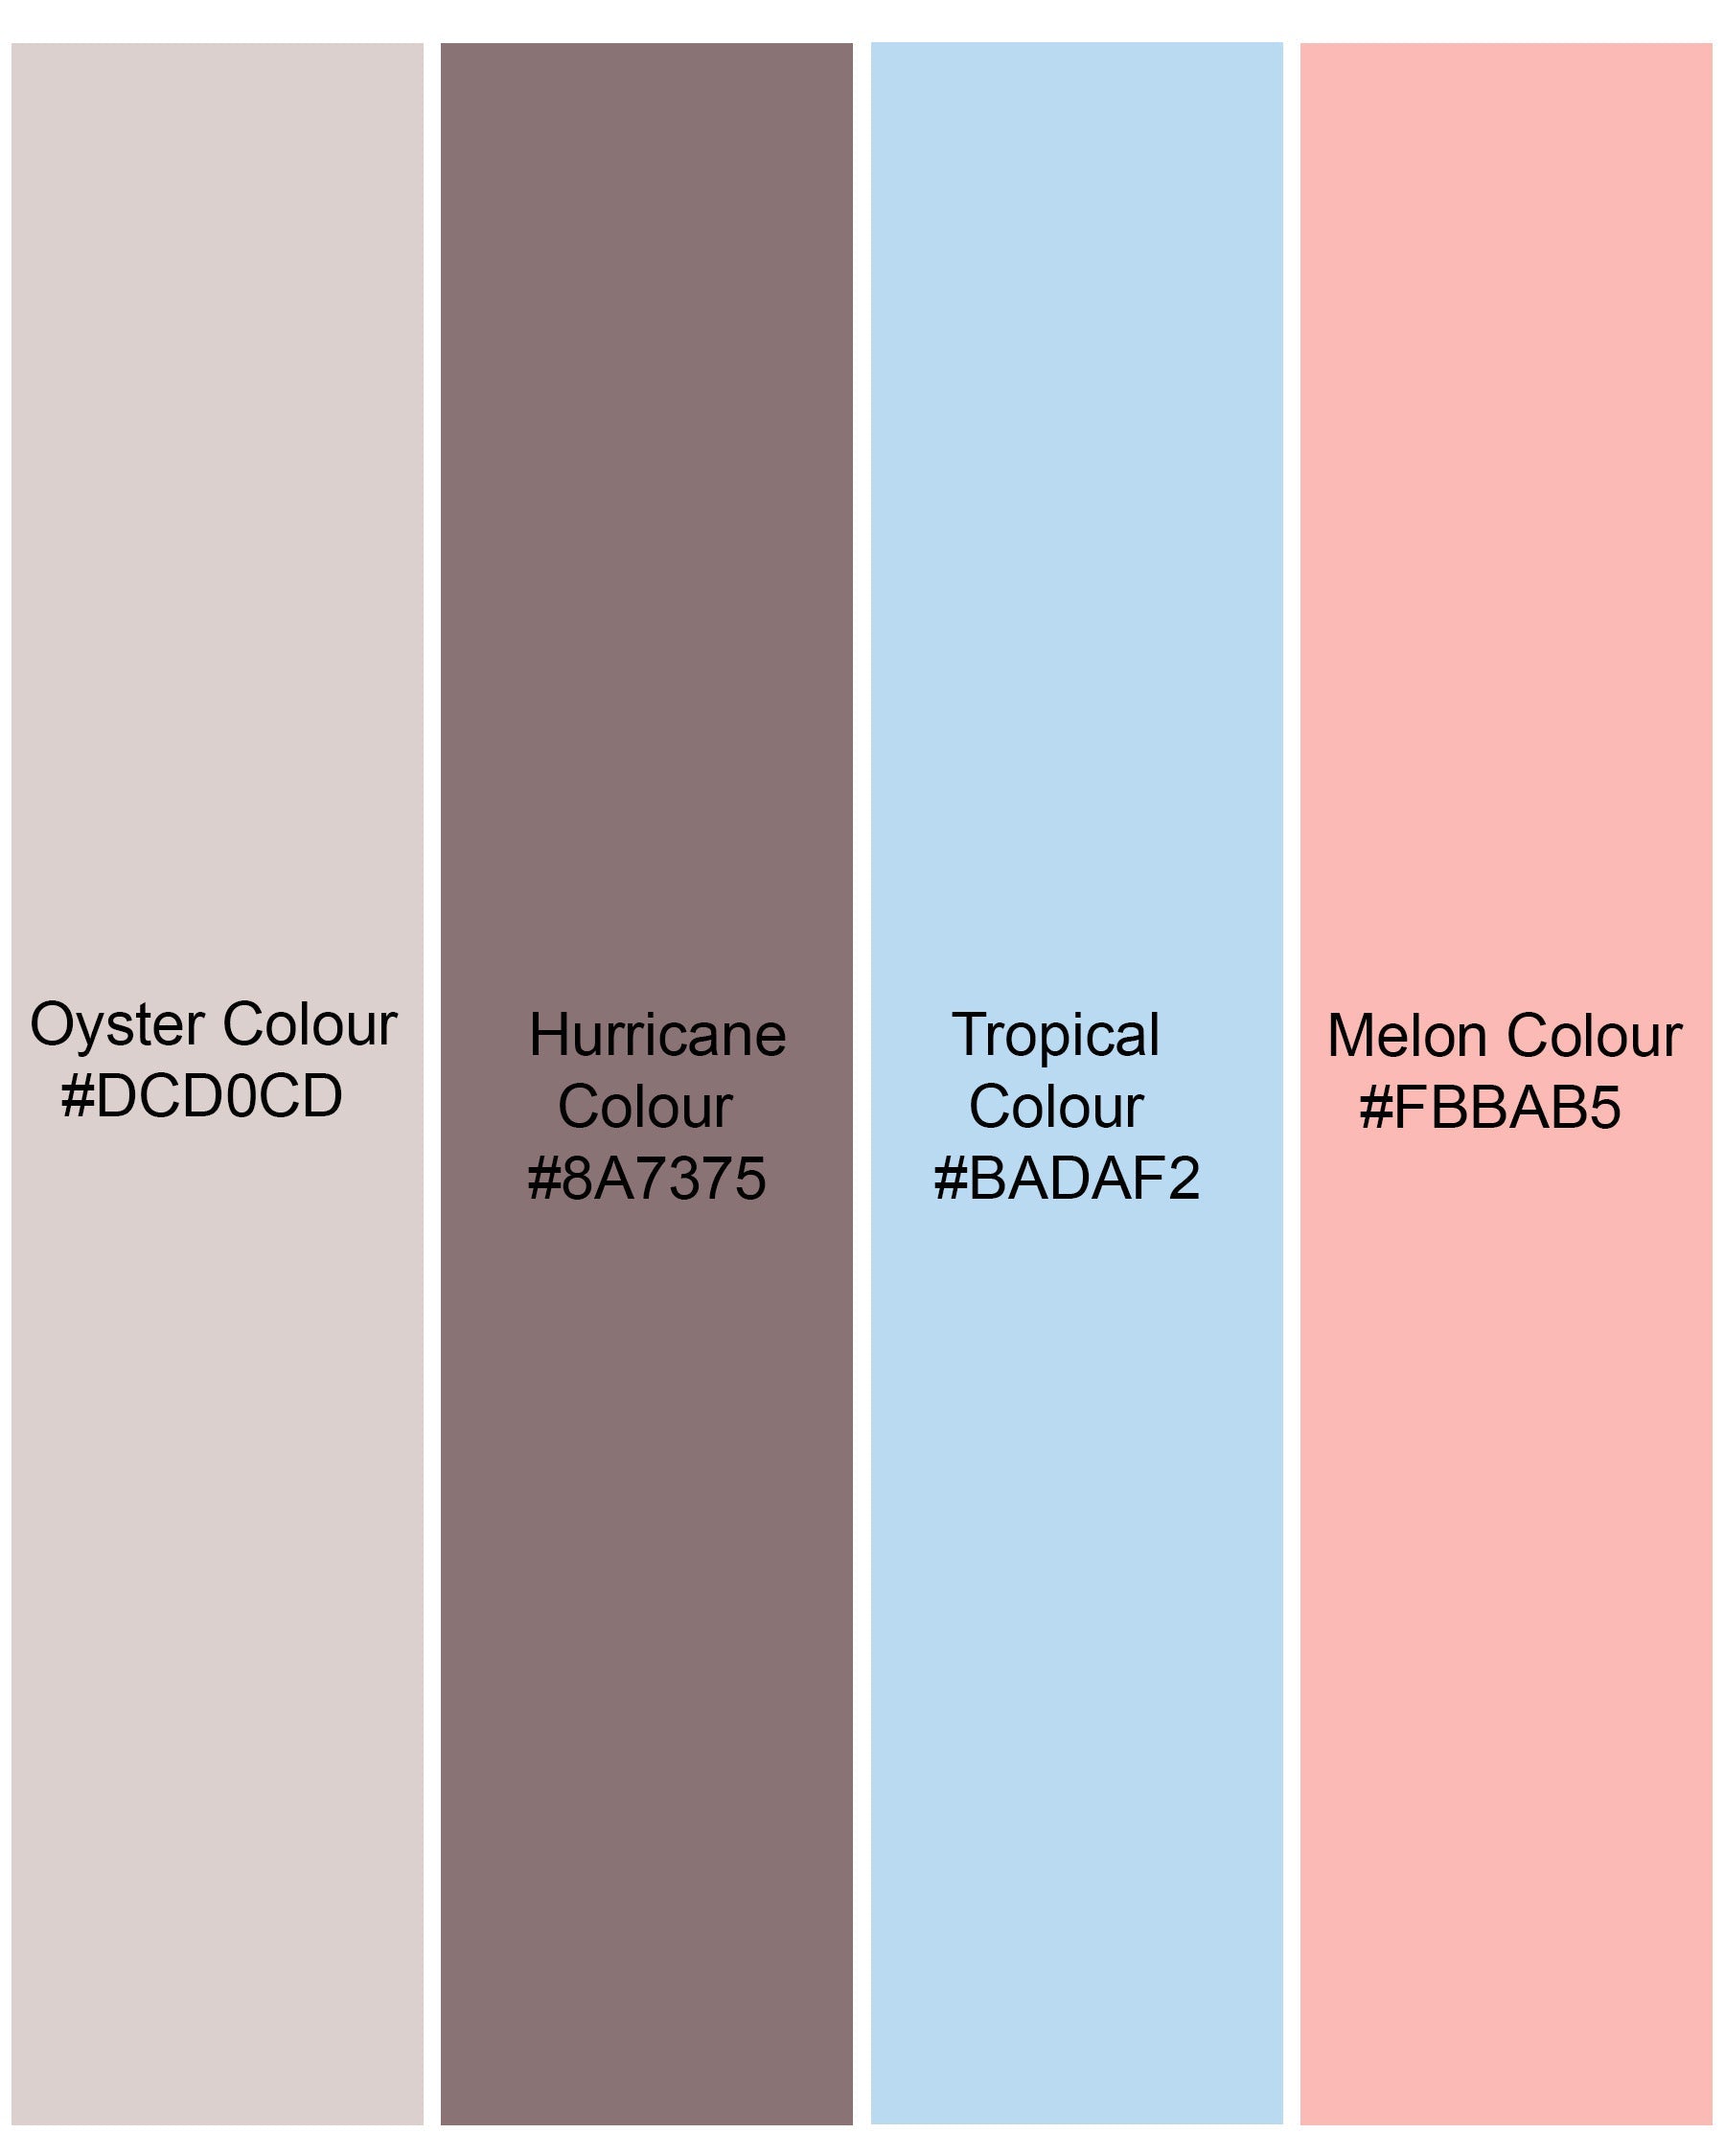 Oyster Gray with Hurricane Brown Multicolour Striped Premium Cotton Shirt 8135-38, 8135-H-38, 8135-39, 8135-H-39, 8135-40, 8135-H-40, 8135-42, 8135-H-42, 8135-44, 8135-H-44, 8135-46, 8135-H-46, 8135-48, 8135-H-48, 8135-50, 8135-H-50, 8135-52, 8135-H-52